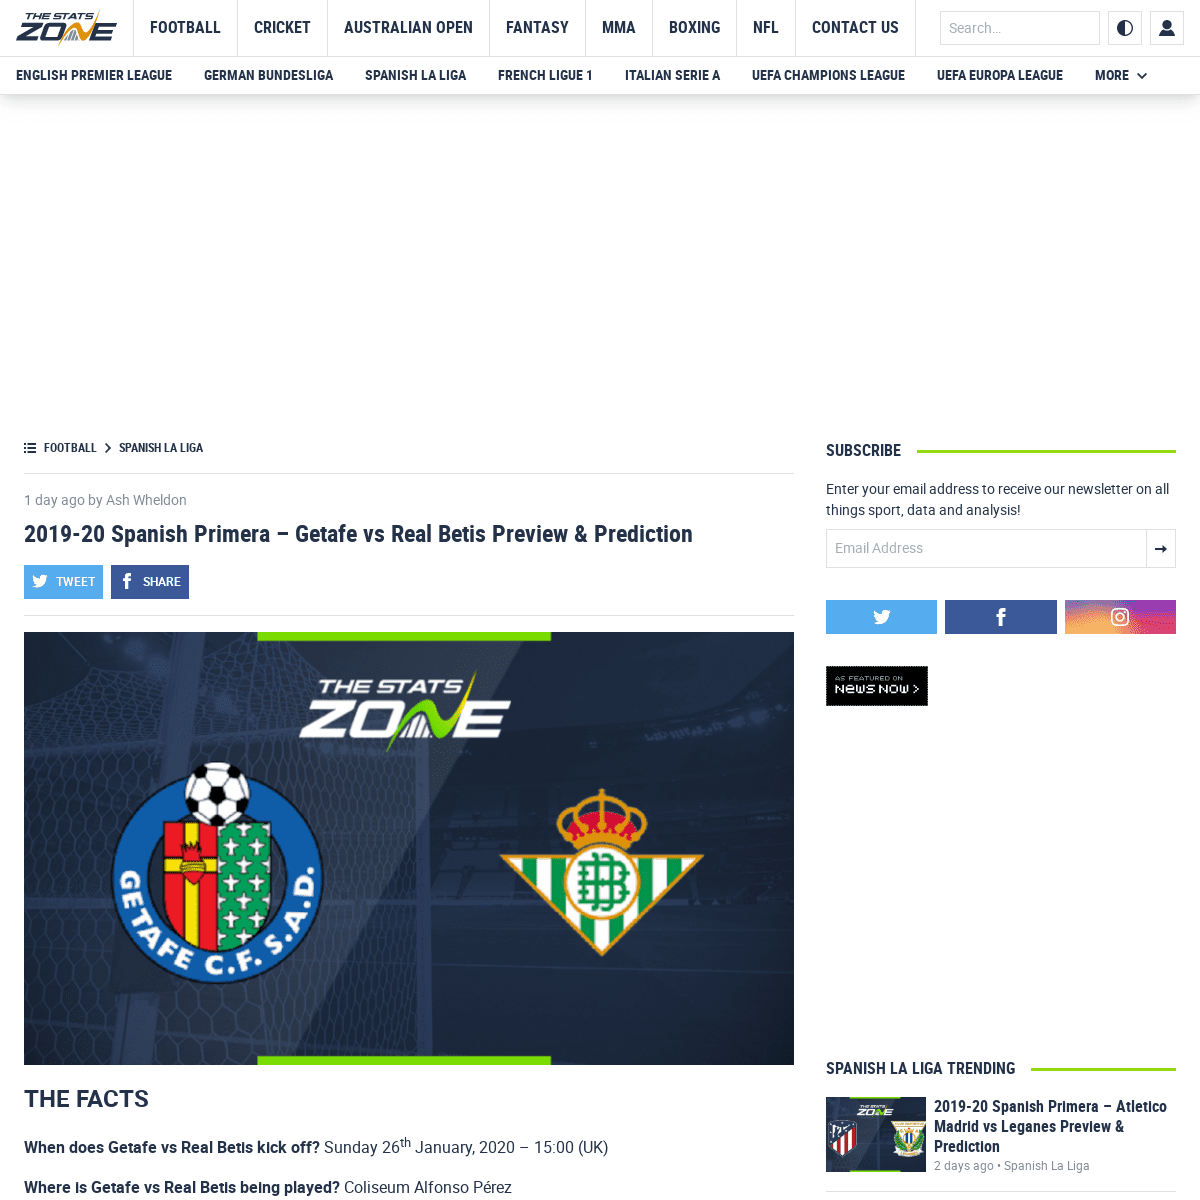 A complete backup of www.thestatszone.com/football/spanish-la-liga/2019-20-spanish-primera-getafe-vs-real-betis-preview-predicti